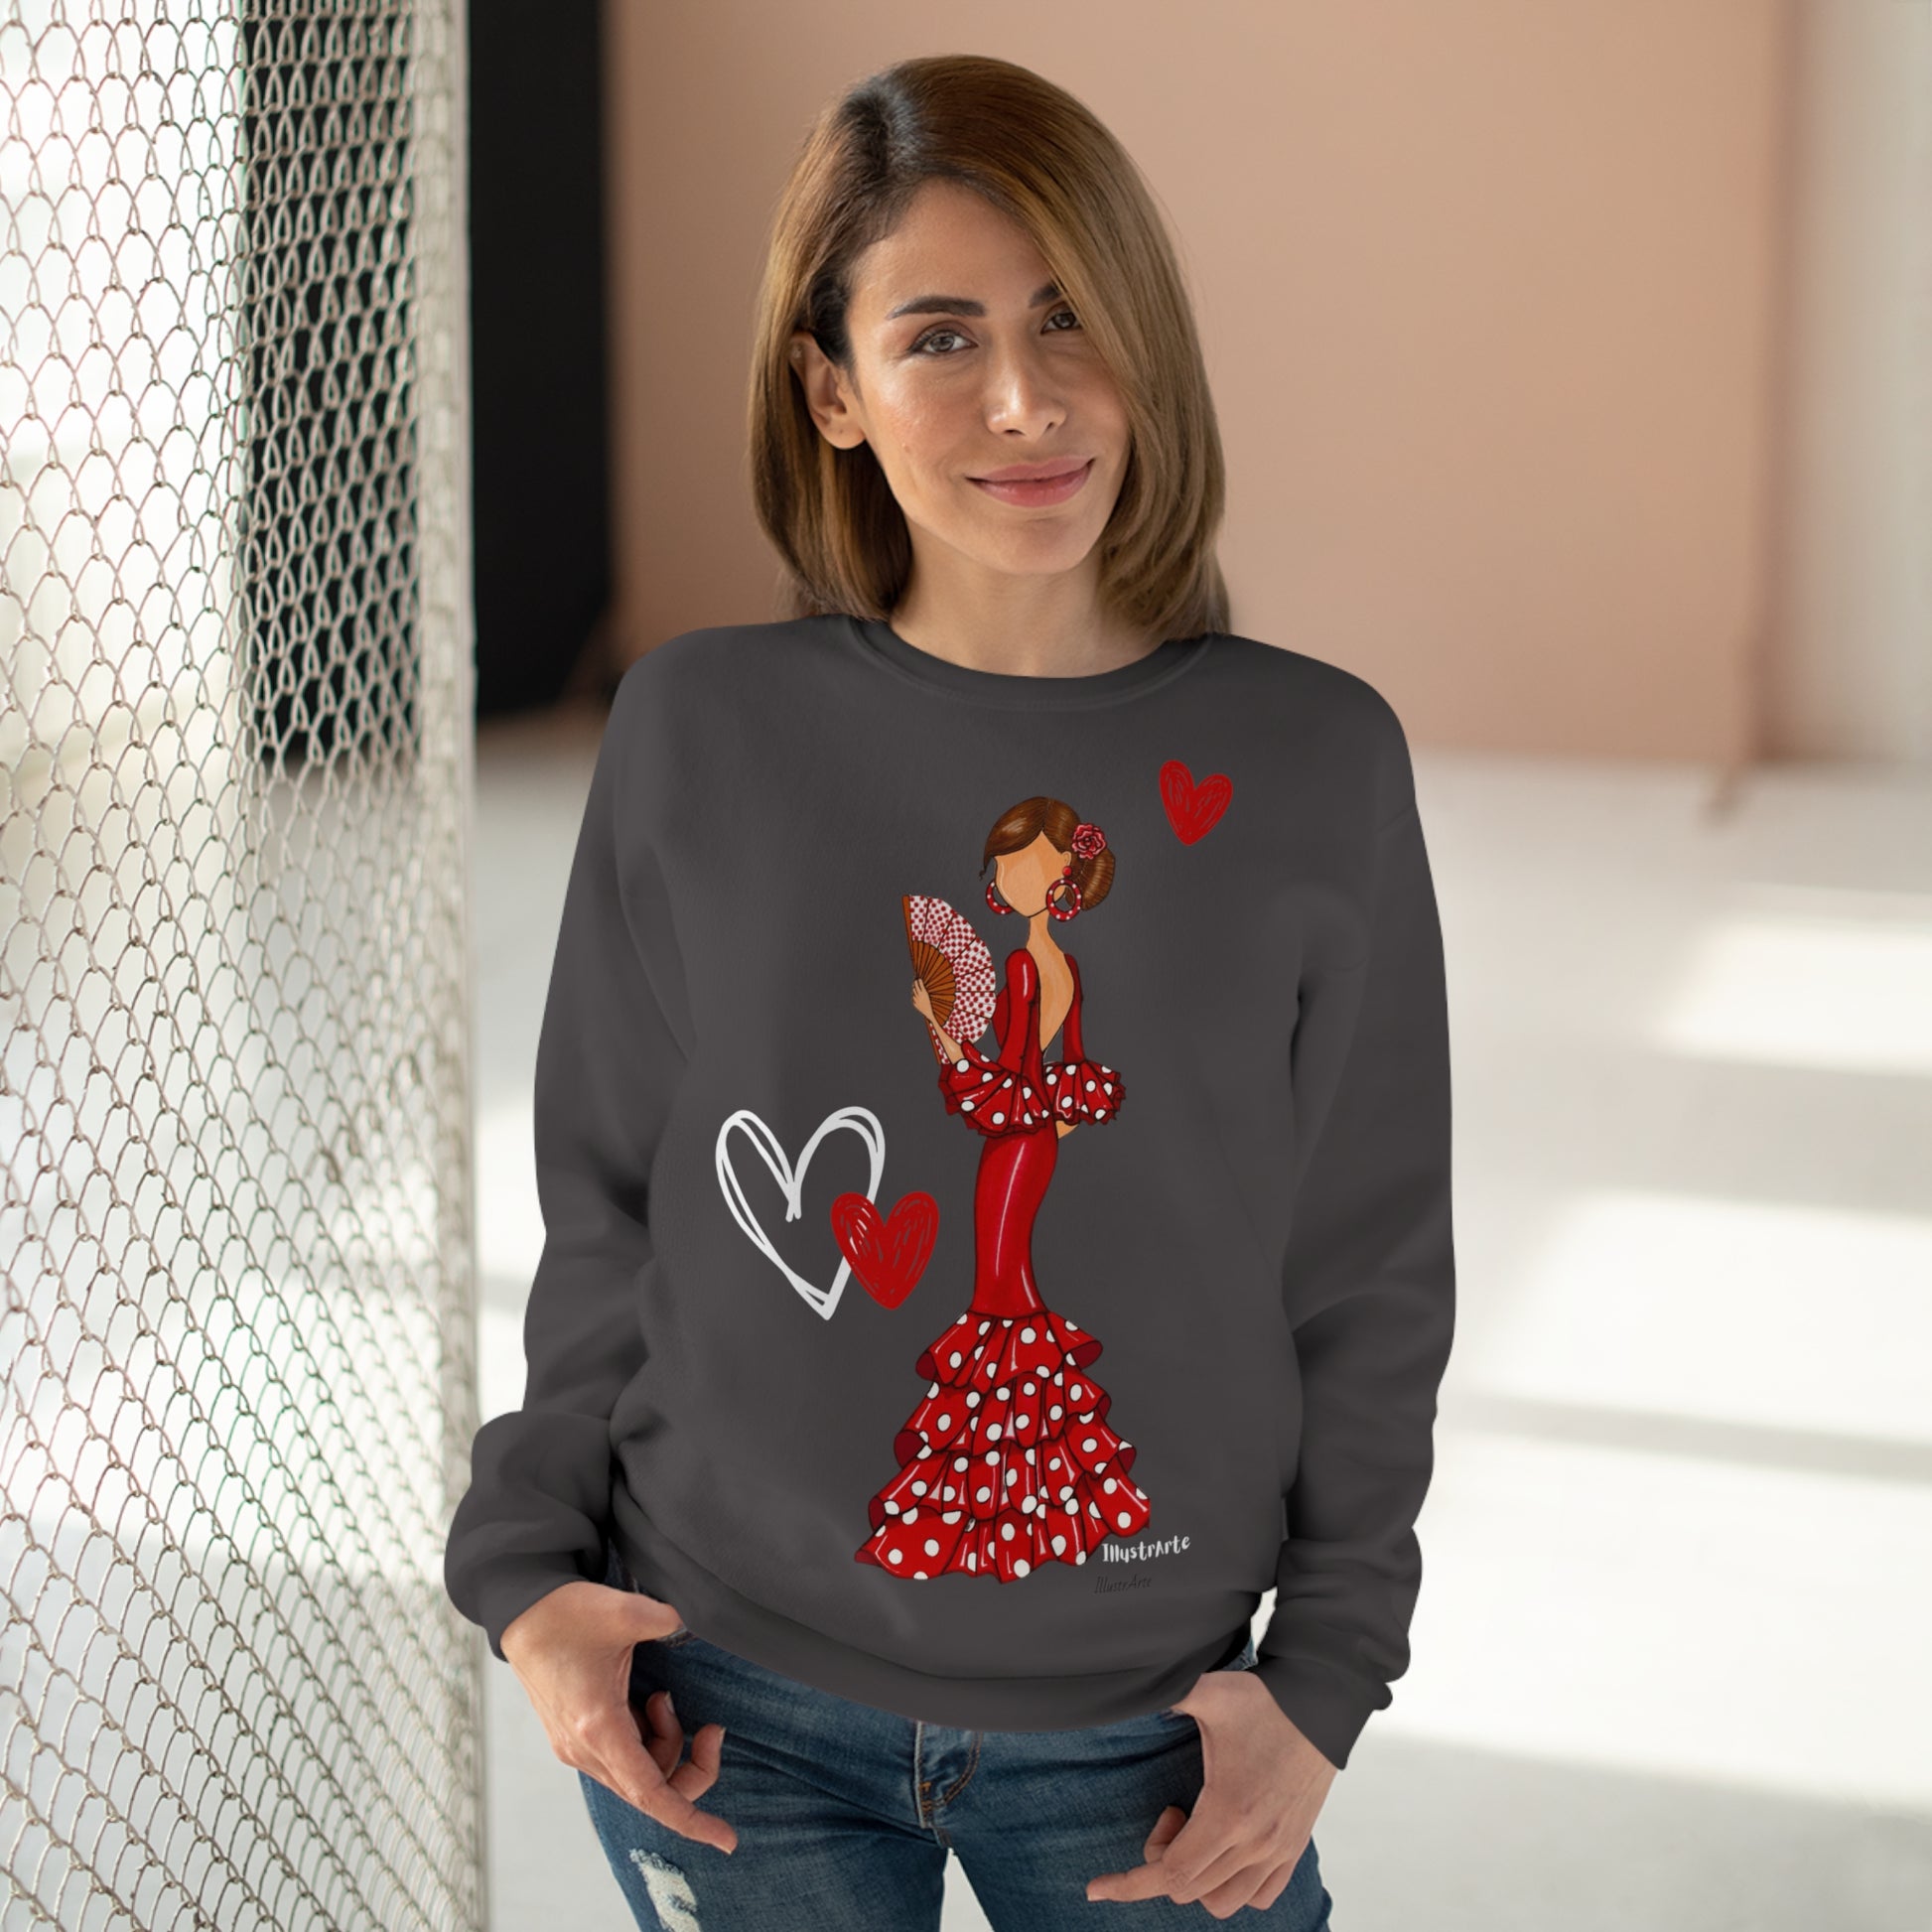 a woman wearing a sweatshirt with a heart on it